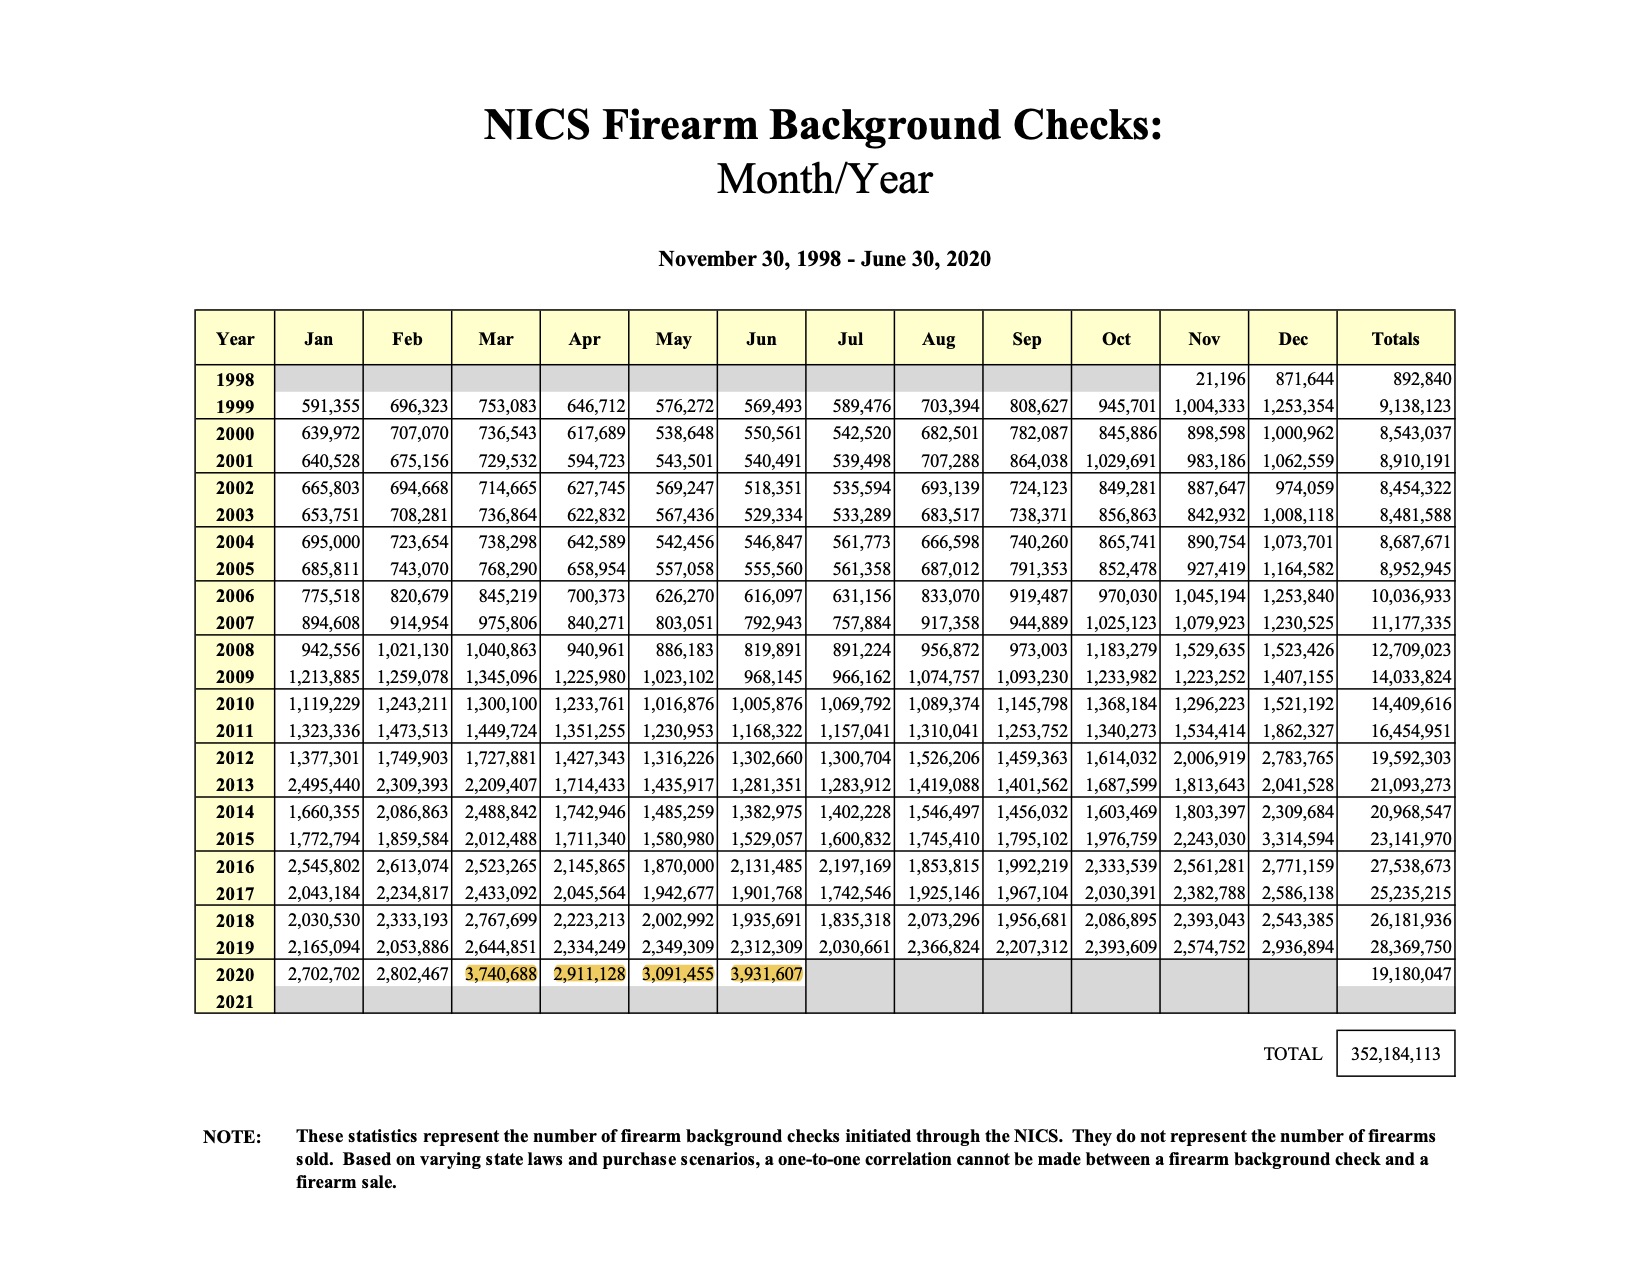 NICS background checks by month 